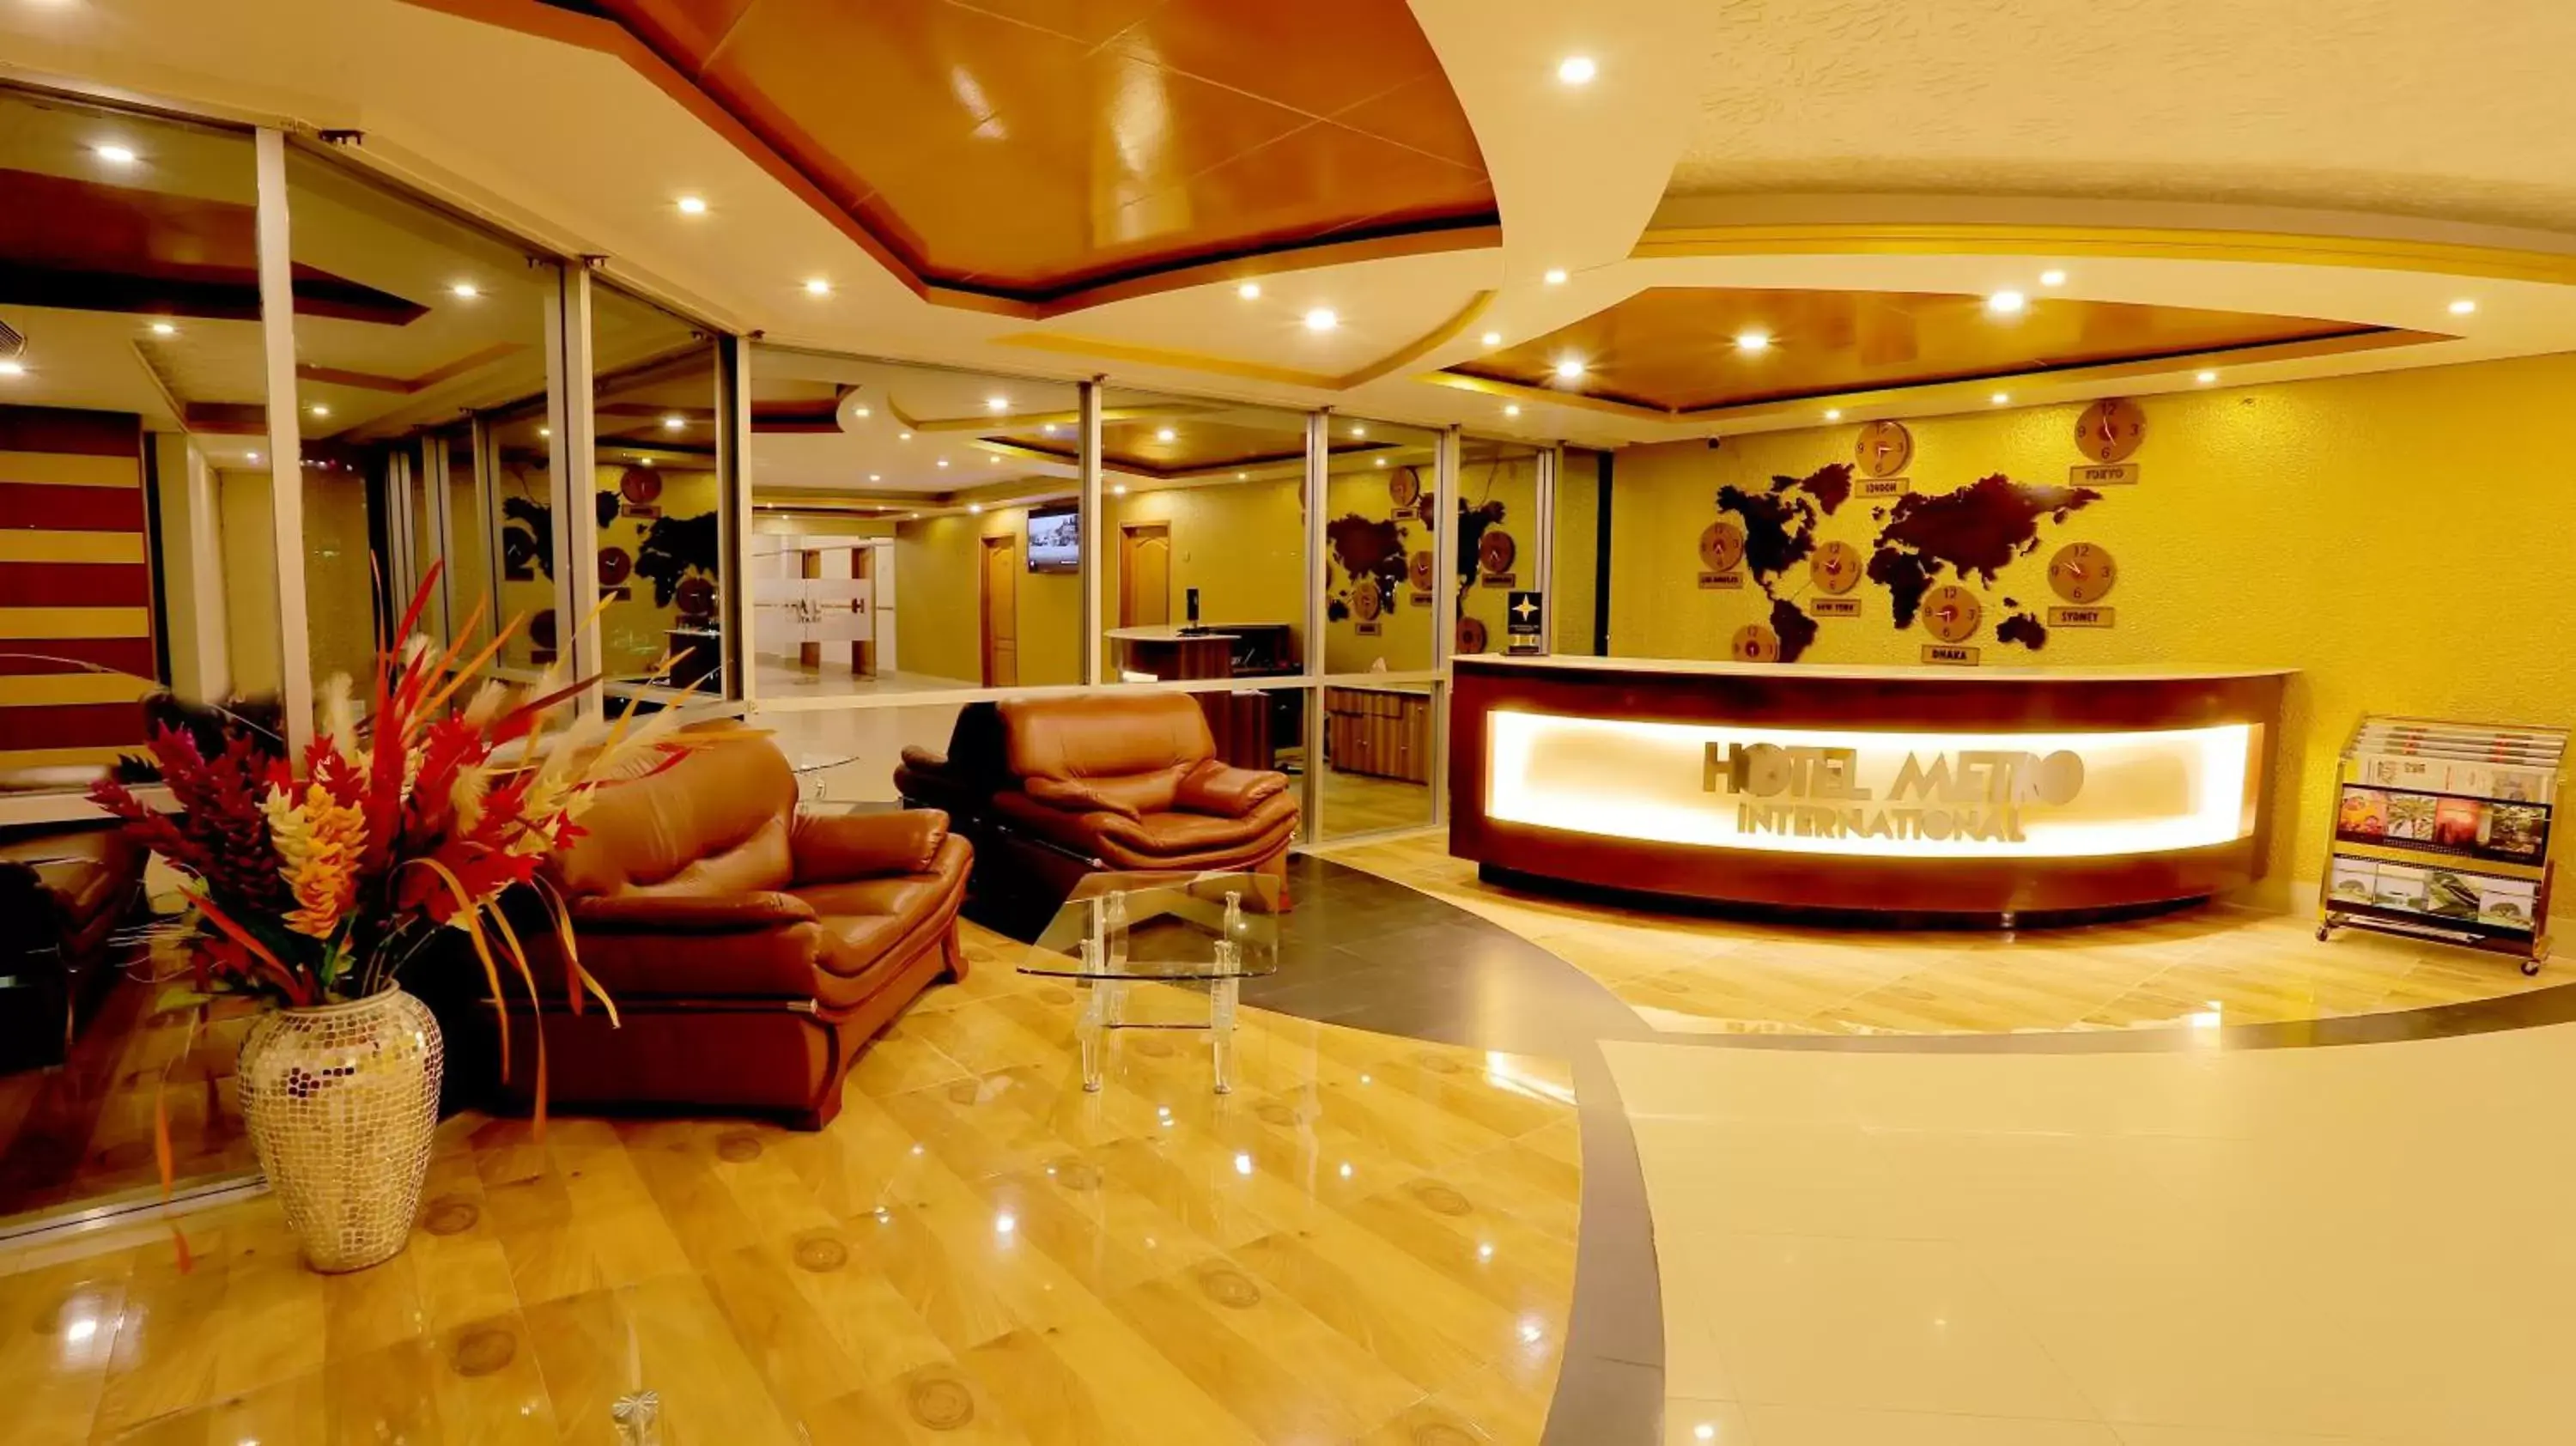 Lobby or reception, Lobby/Reception in Hotel Metro International